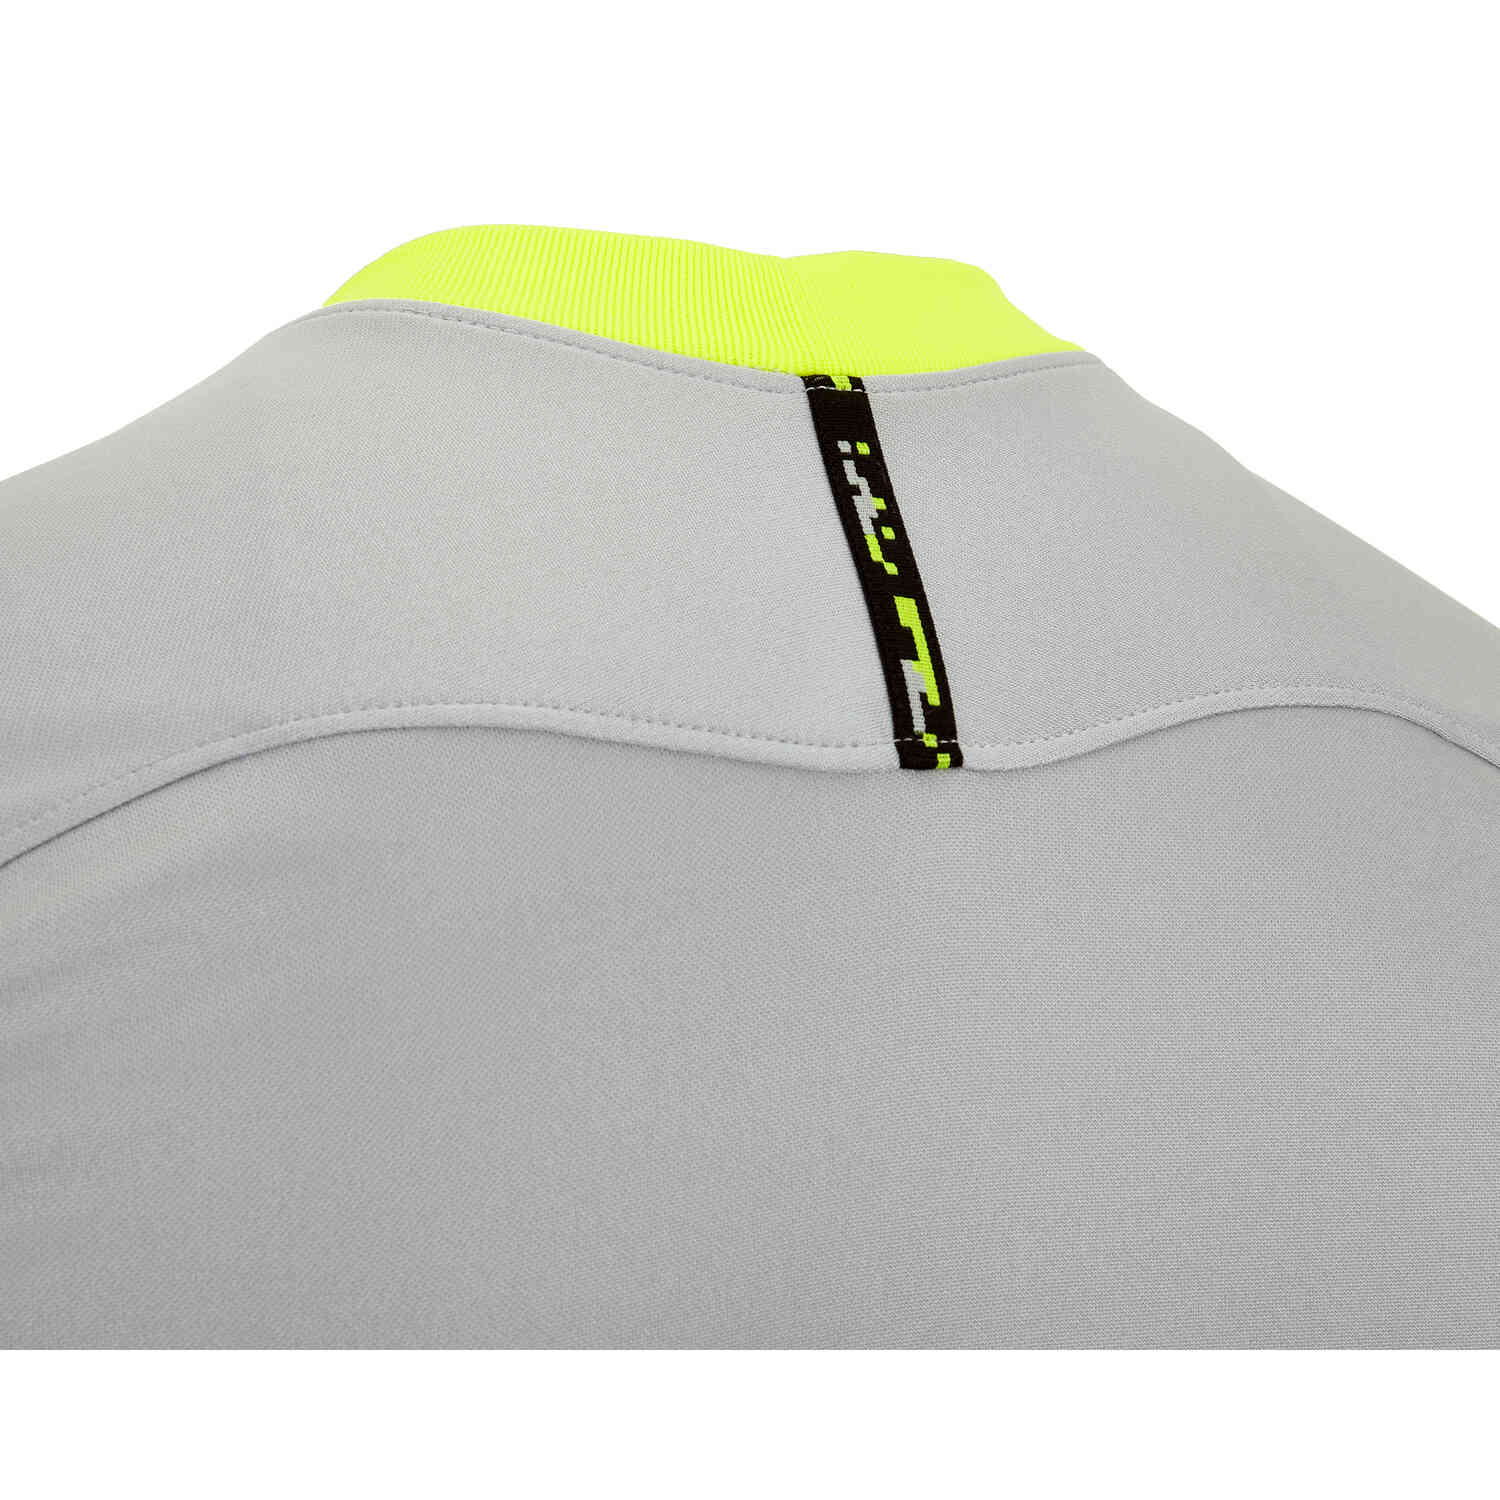 Tottenham Hotspur 2021 Nike Air Max Special Edition Shirt - Football Shirt  Culture - Latest Football Kit News and More